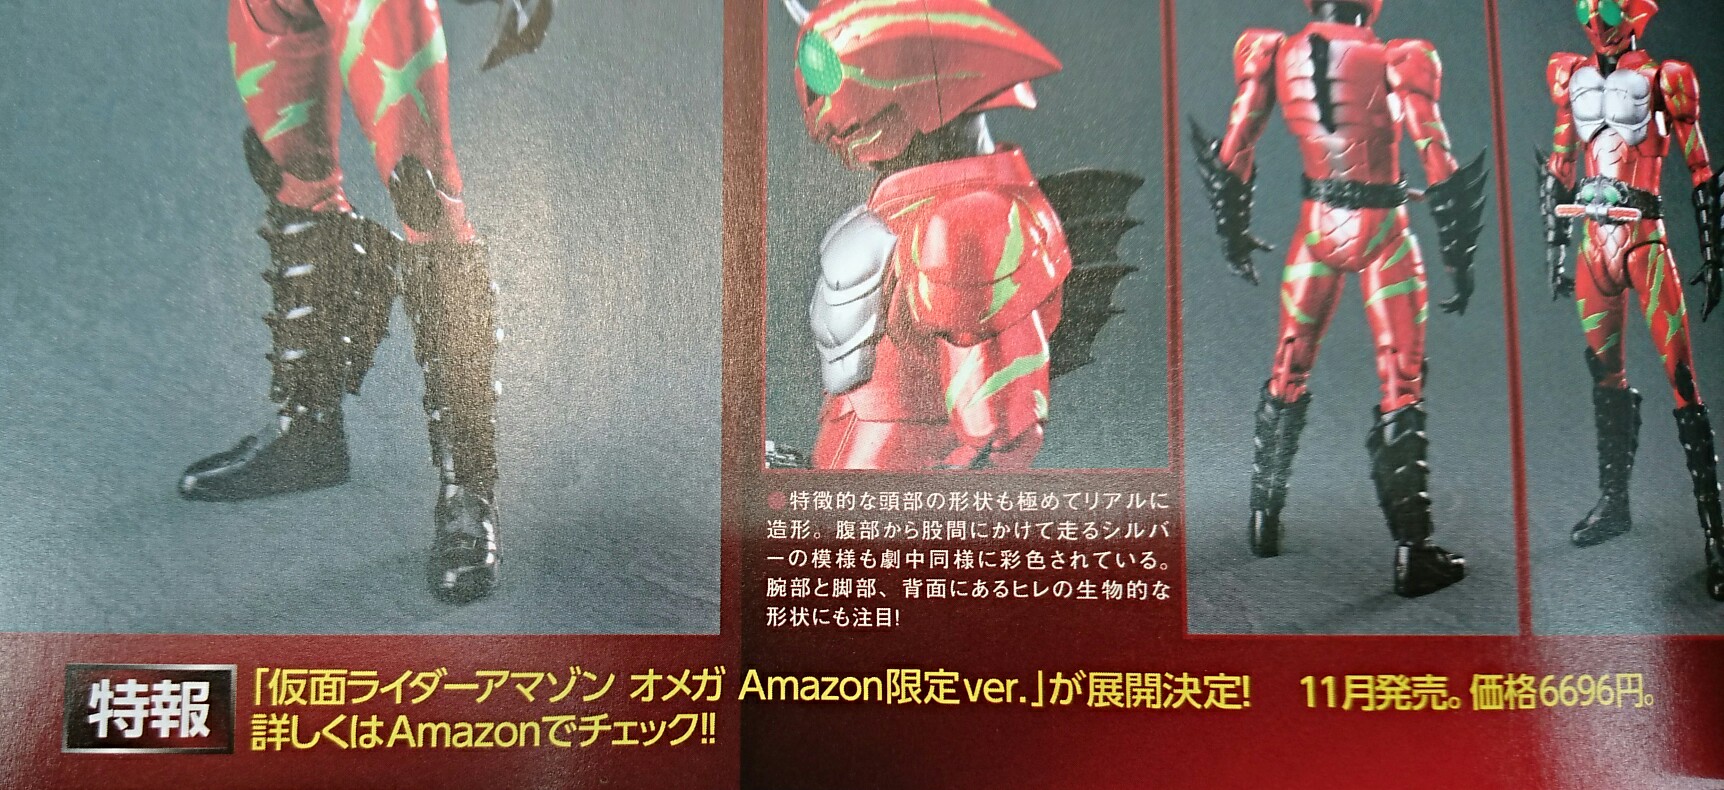 S.H.Figuarts Kamen Rider Amazon Alpha Amazon Exclusive